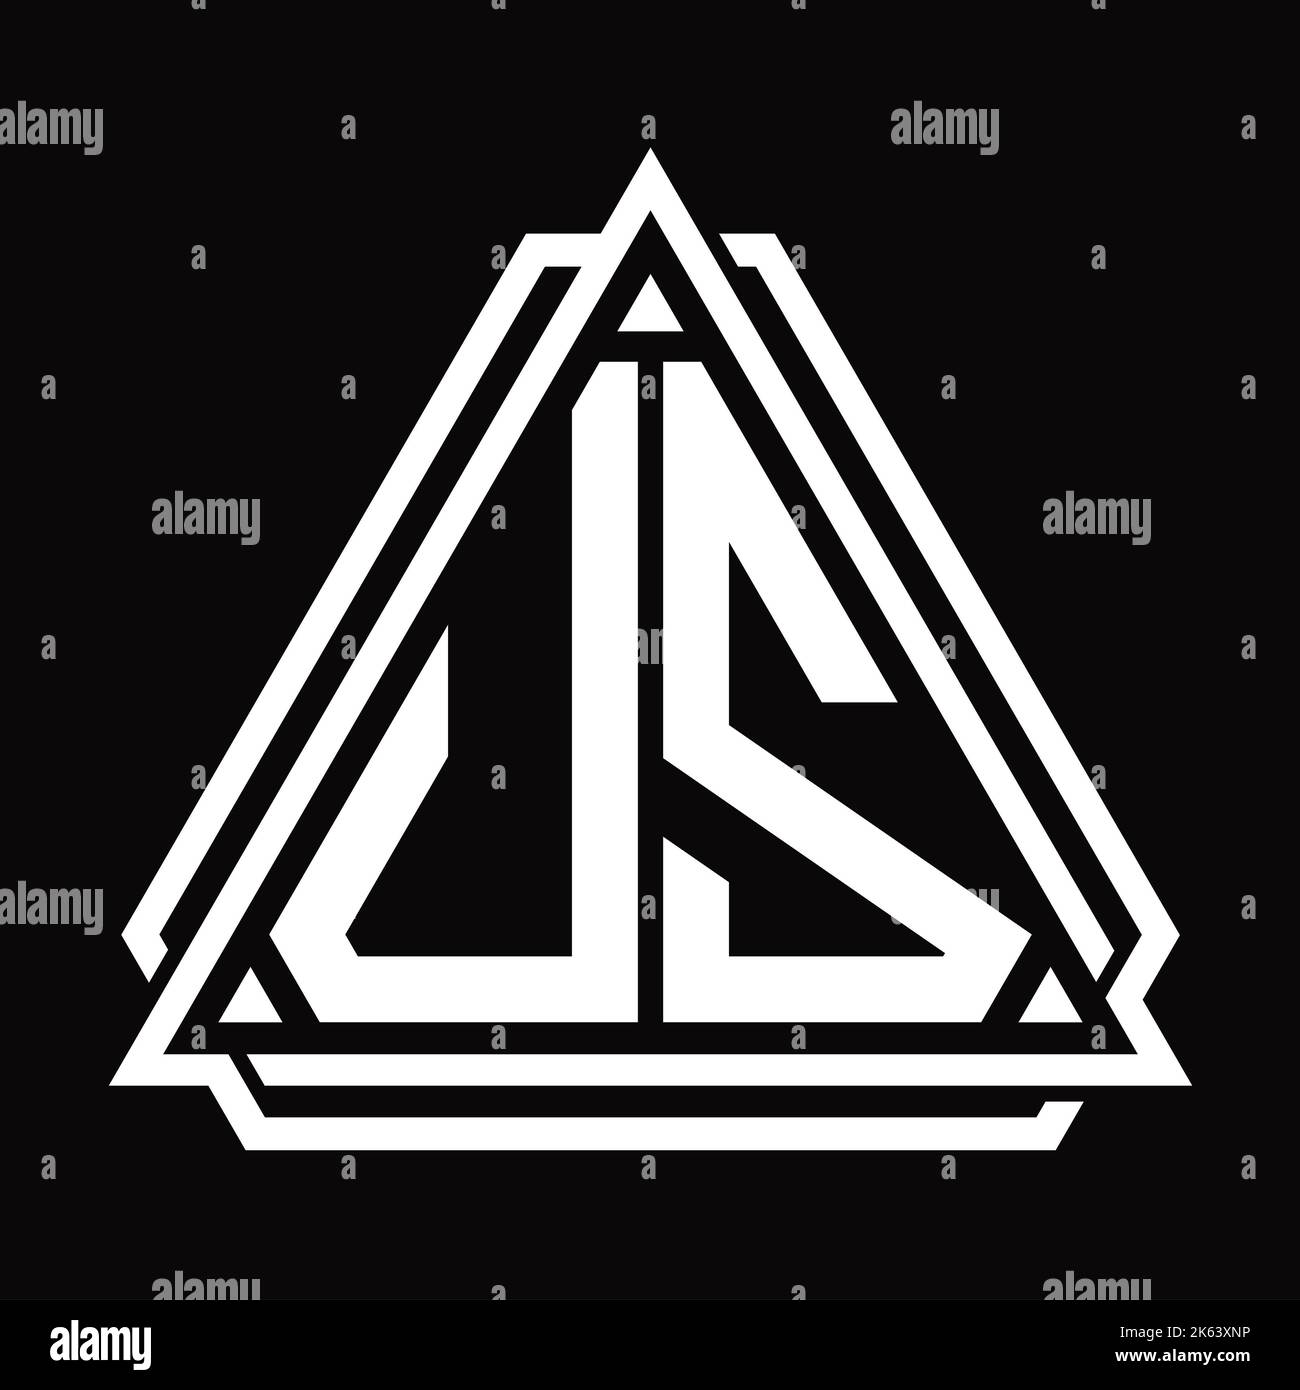 UZ Logo letter monogram with triangle shape design template isolated on black background Stock Photo